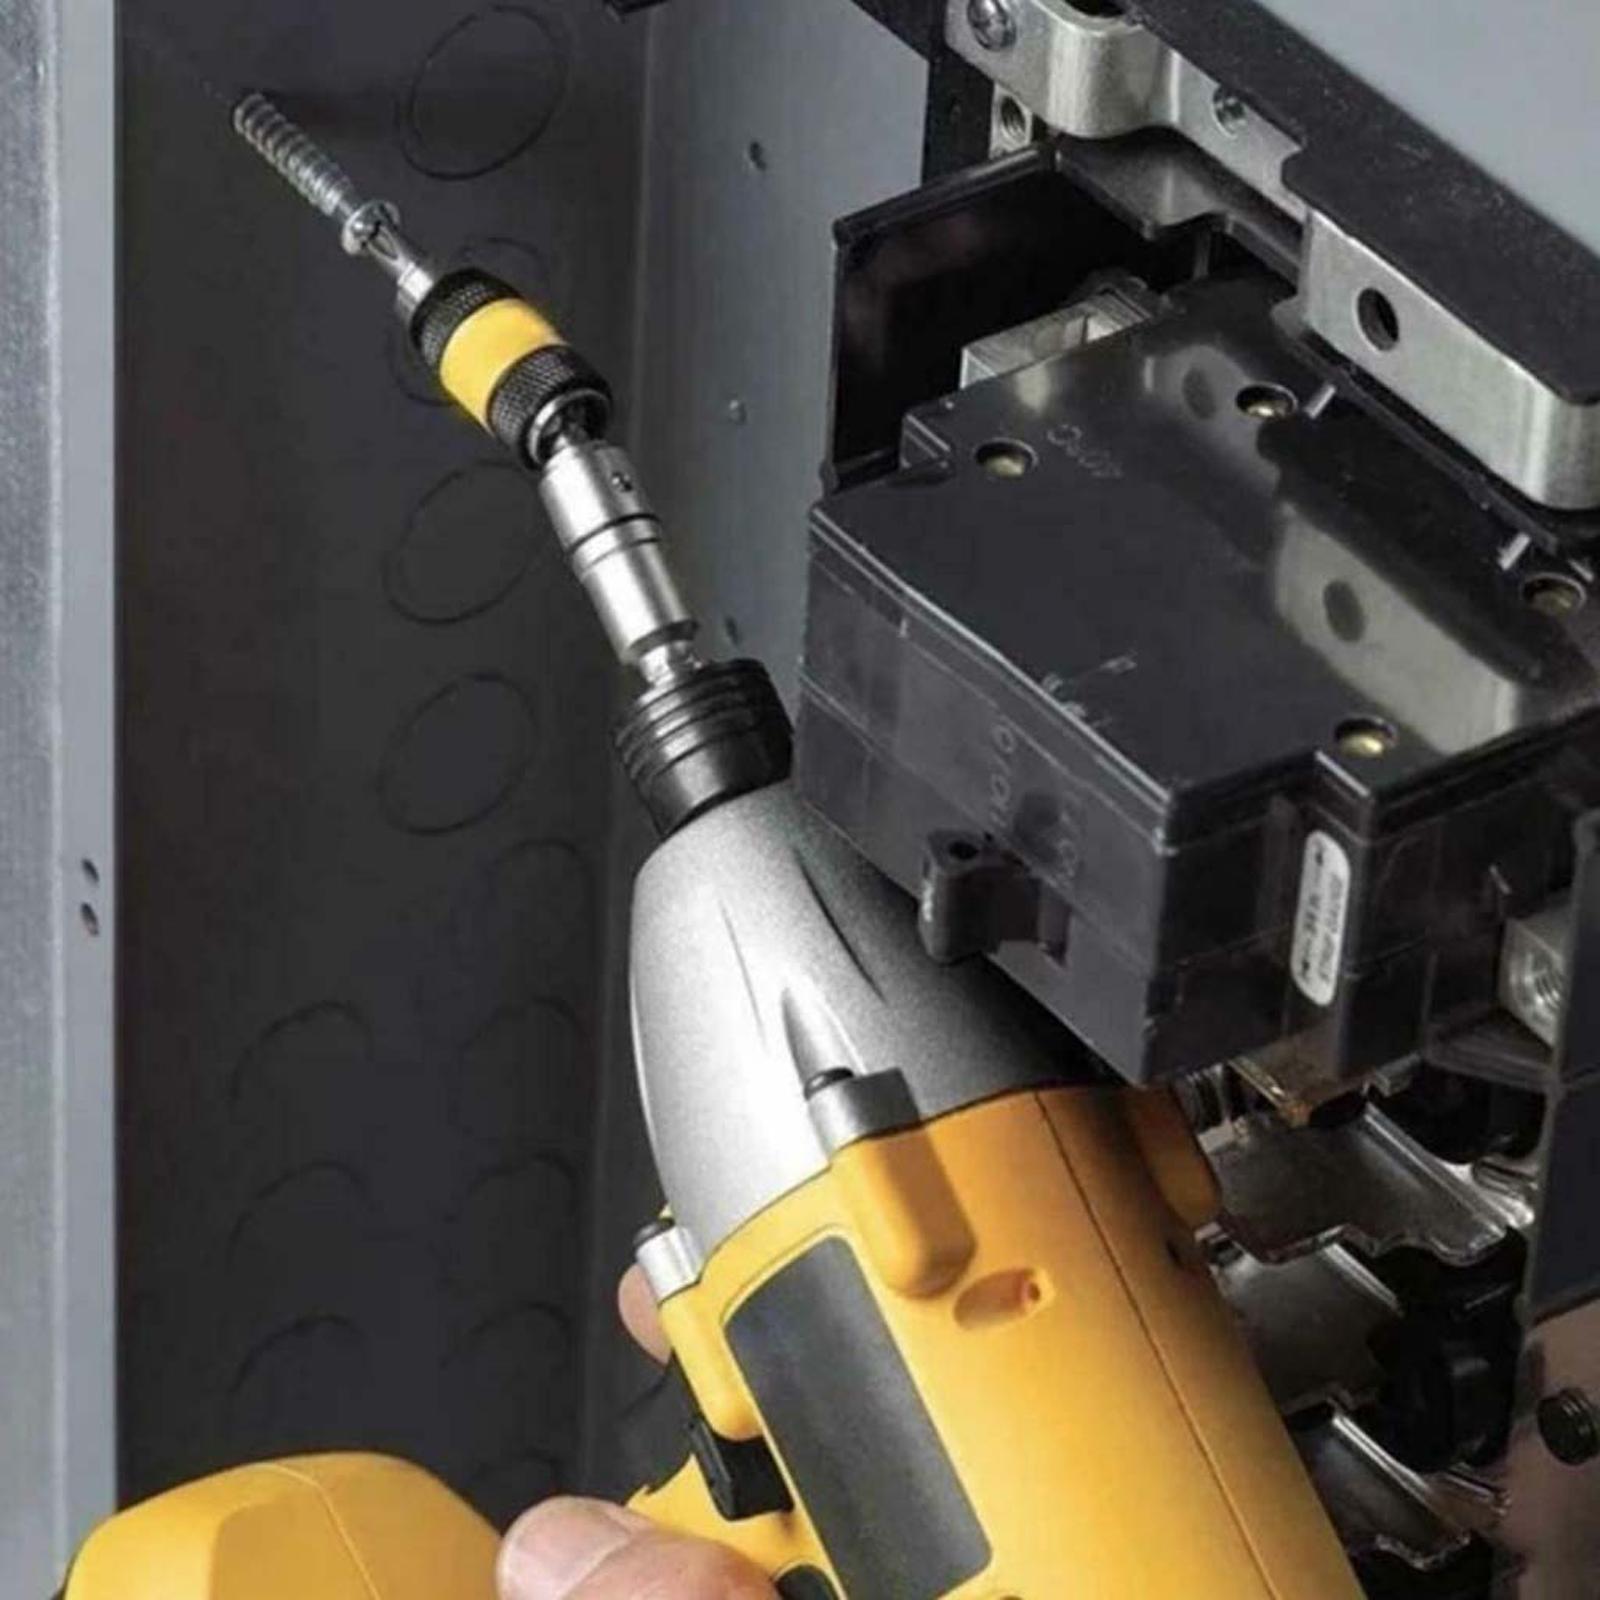 Magnetic Pivoting Bit Tip Swivel Screw Bit Steel Accessory Drill Holders Black